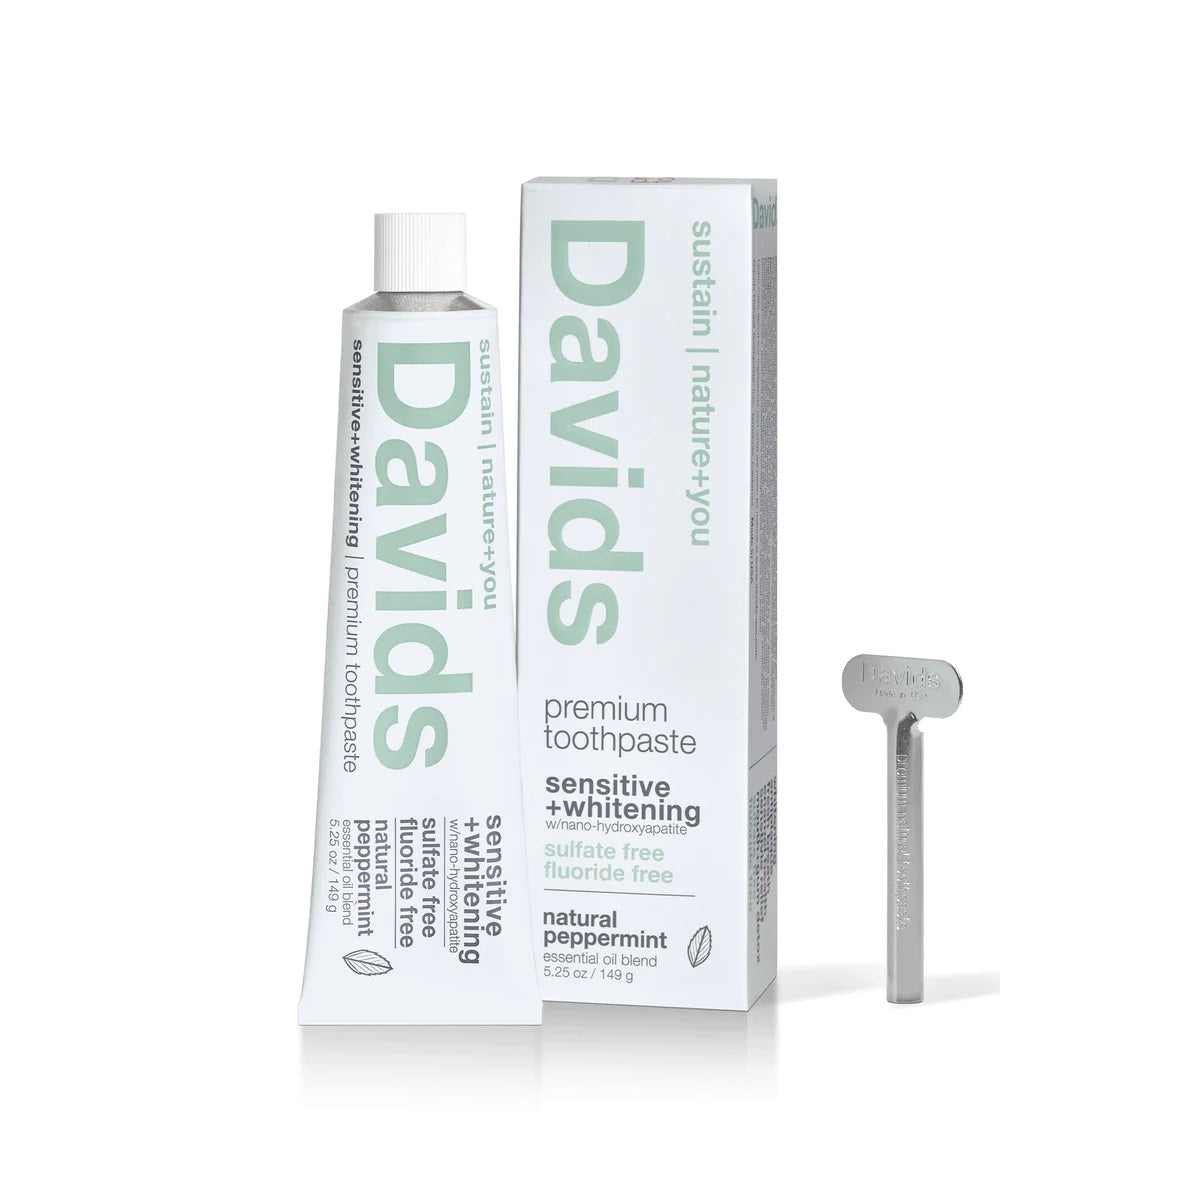 DAVID'S NATURAL TOOTHPASTE Sensitive + Whitening Nano-Hydroxyapatite Premium Toothpaste Peppermint full size